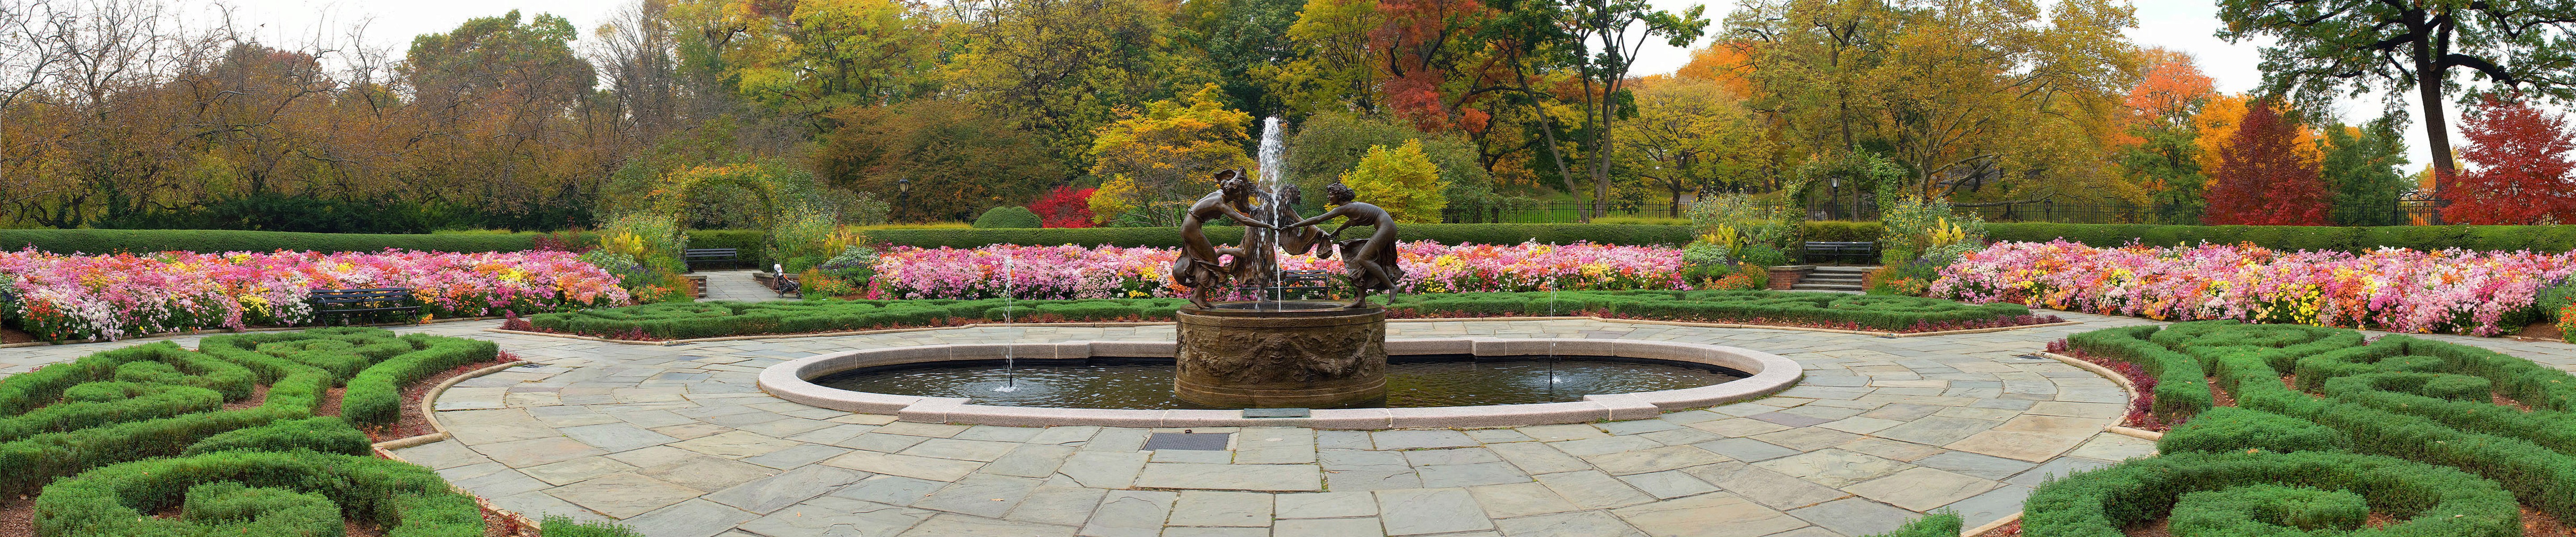 New York City Triple Screen Park Fountain Flowers Cobblestone 5760x1200